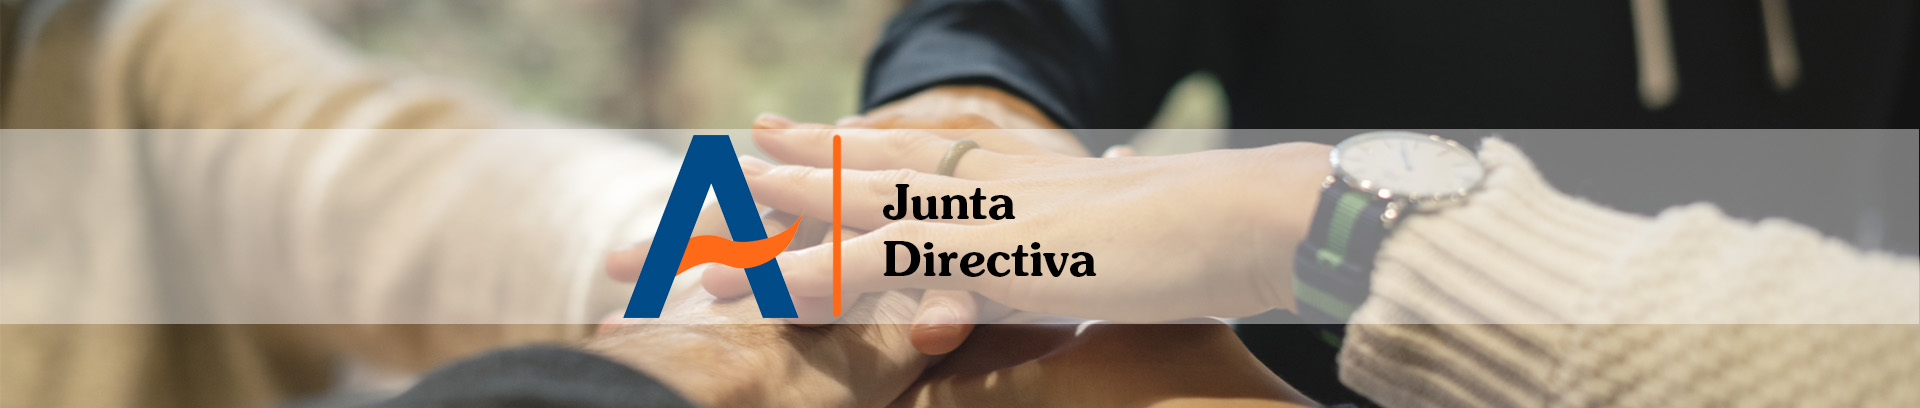 Junta Directiva Agremia